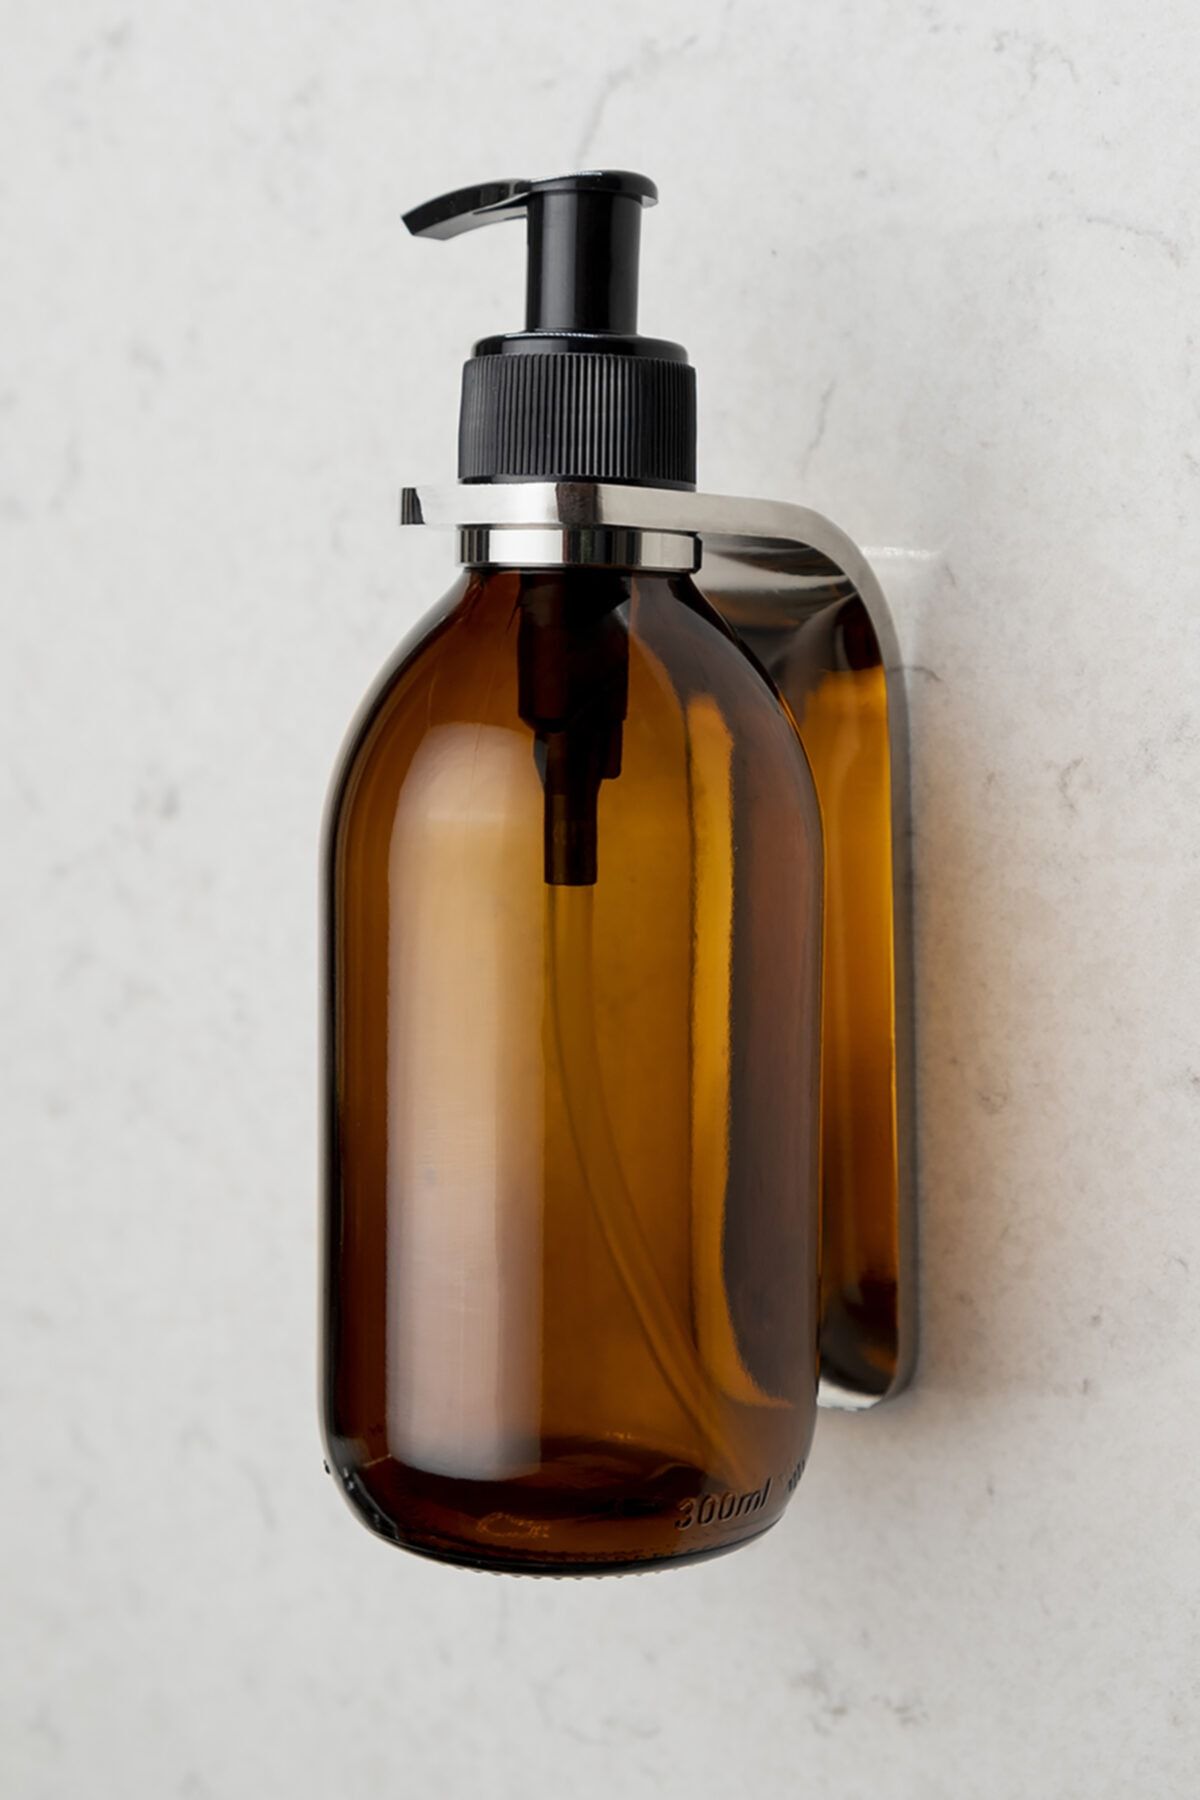 TriChi Design Trichi Home Paslanmaz Krom Amber Cam Sıvı Sabunluk